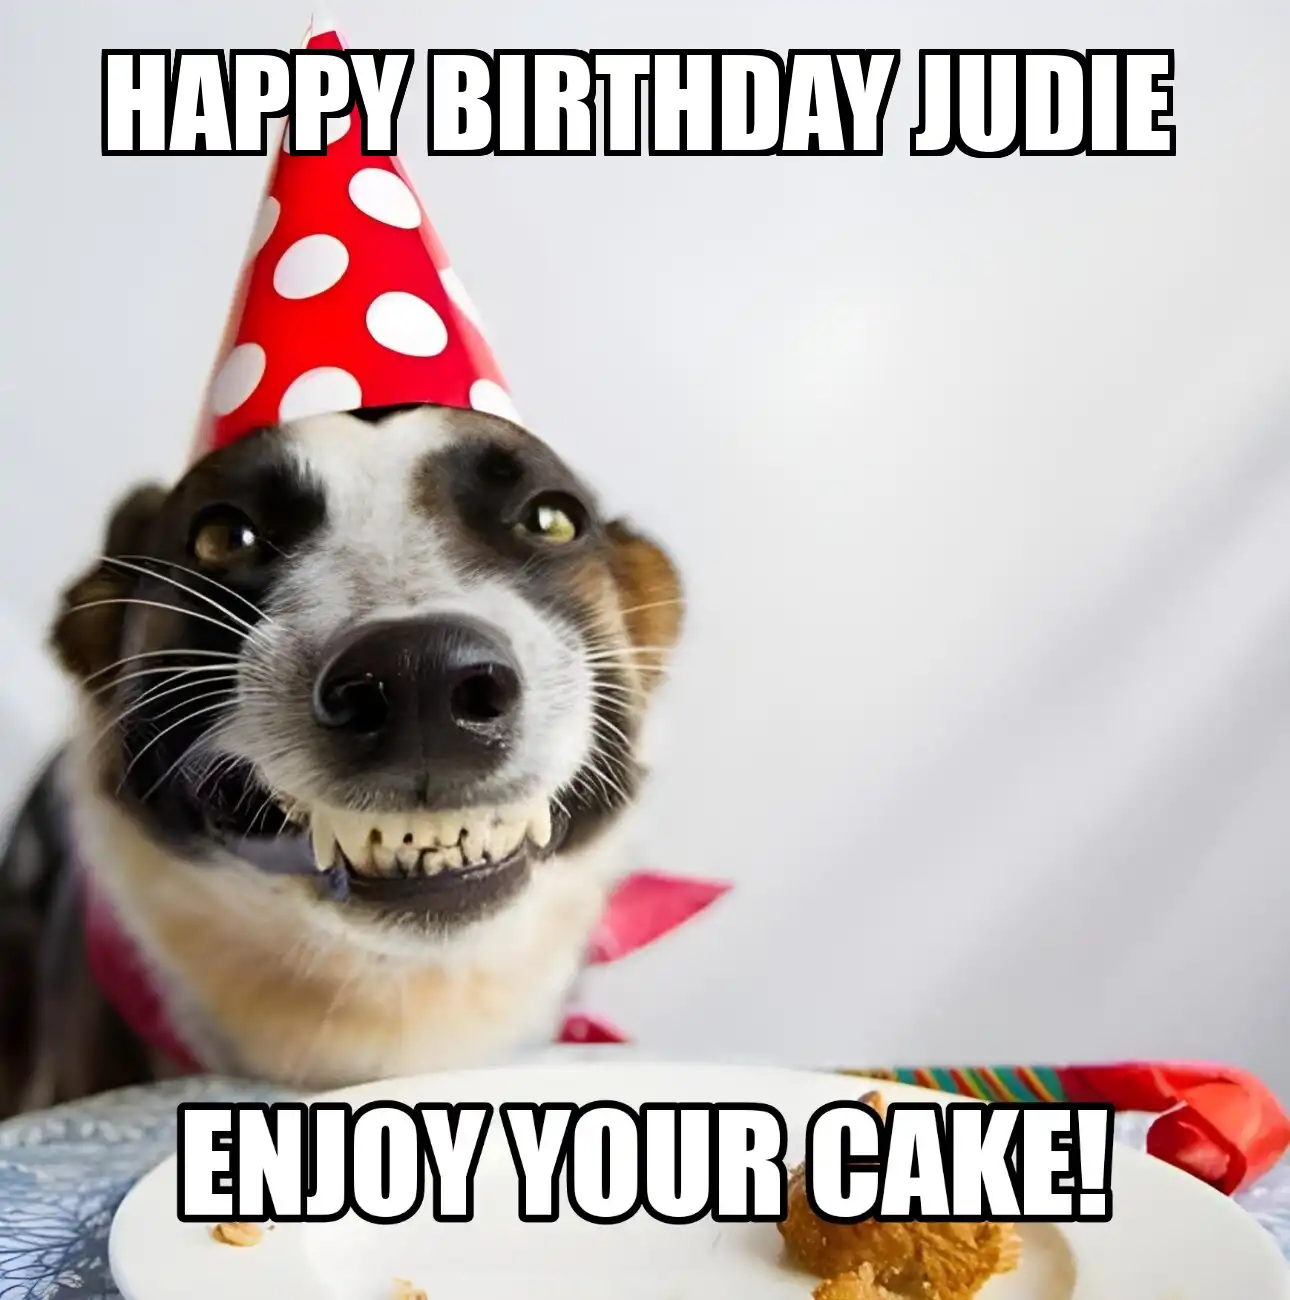 Happy Birthday Judie Enjoy Your Cake Dog Meme